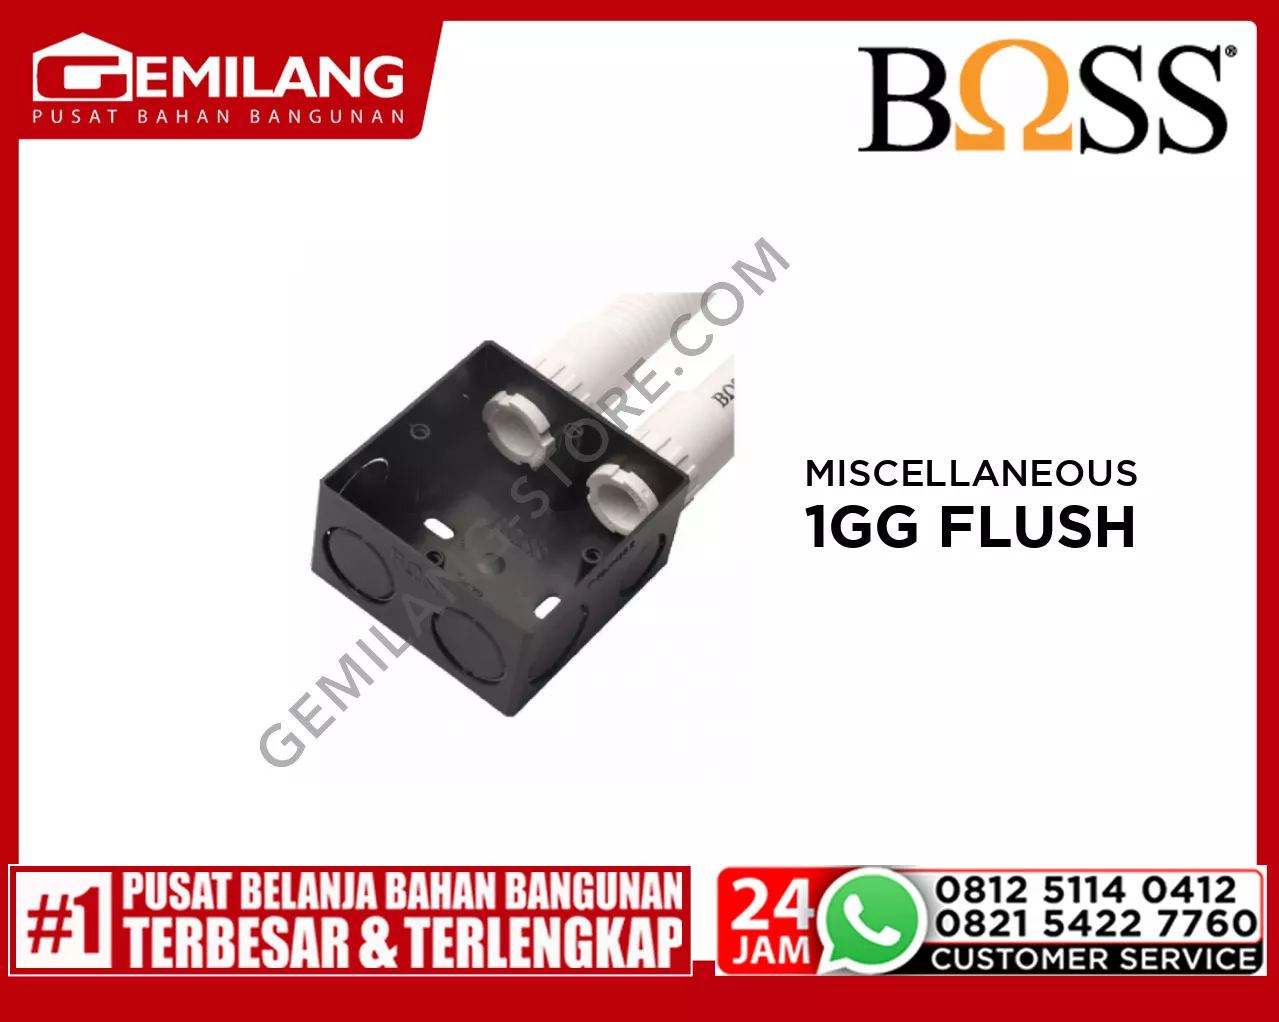 BOSS MISCELLANEOUS 1 GANG FLUSH MOUNTING PLASTIC BOX B157P